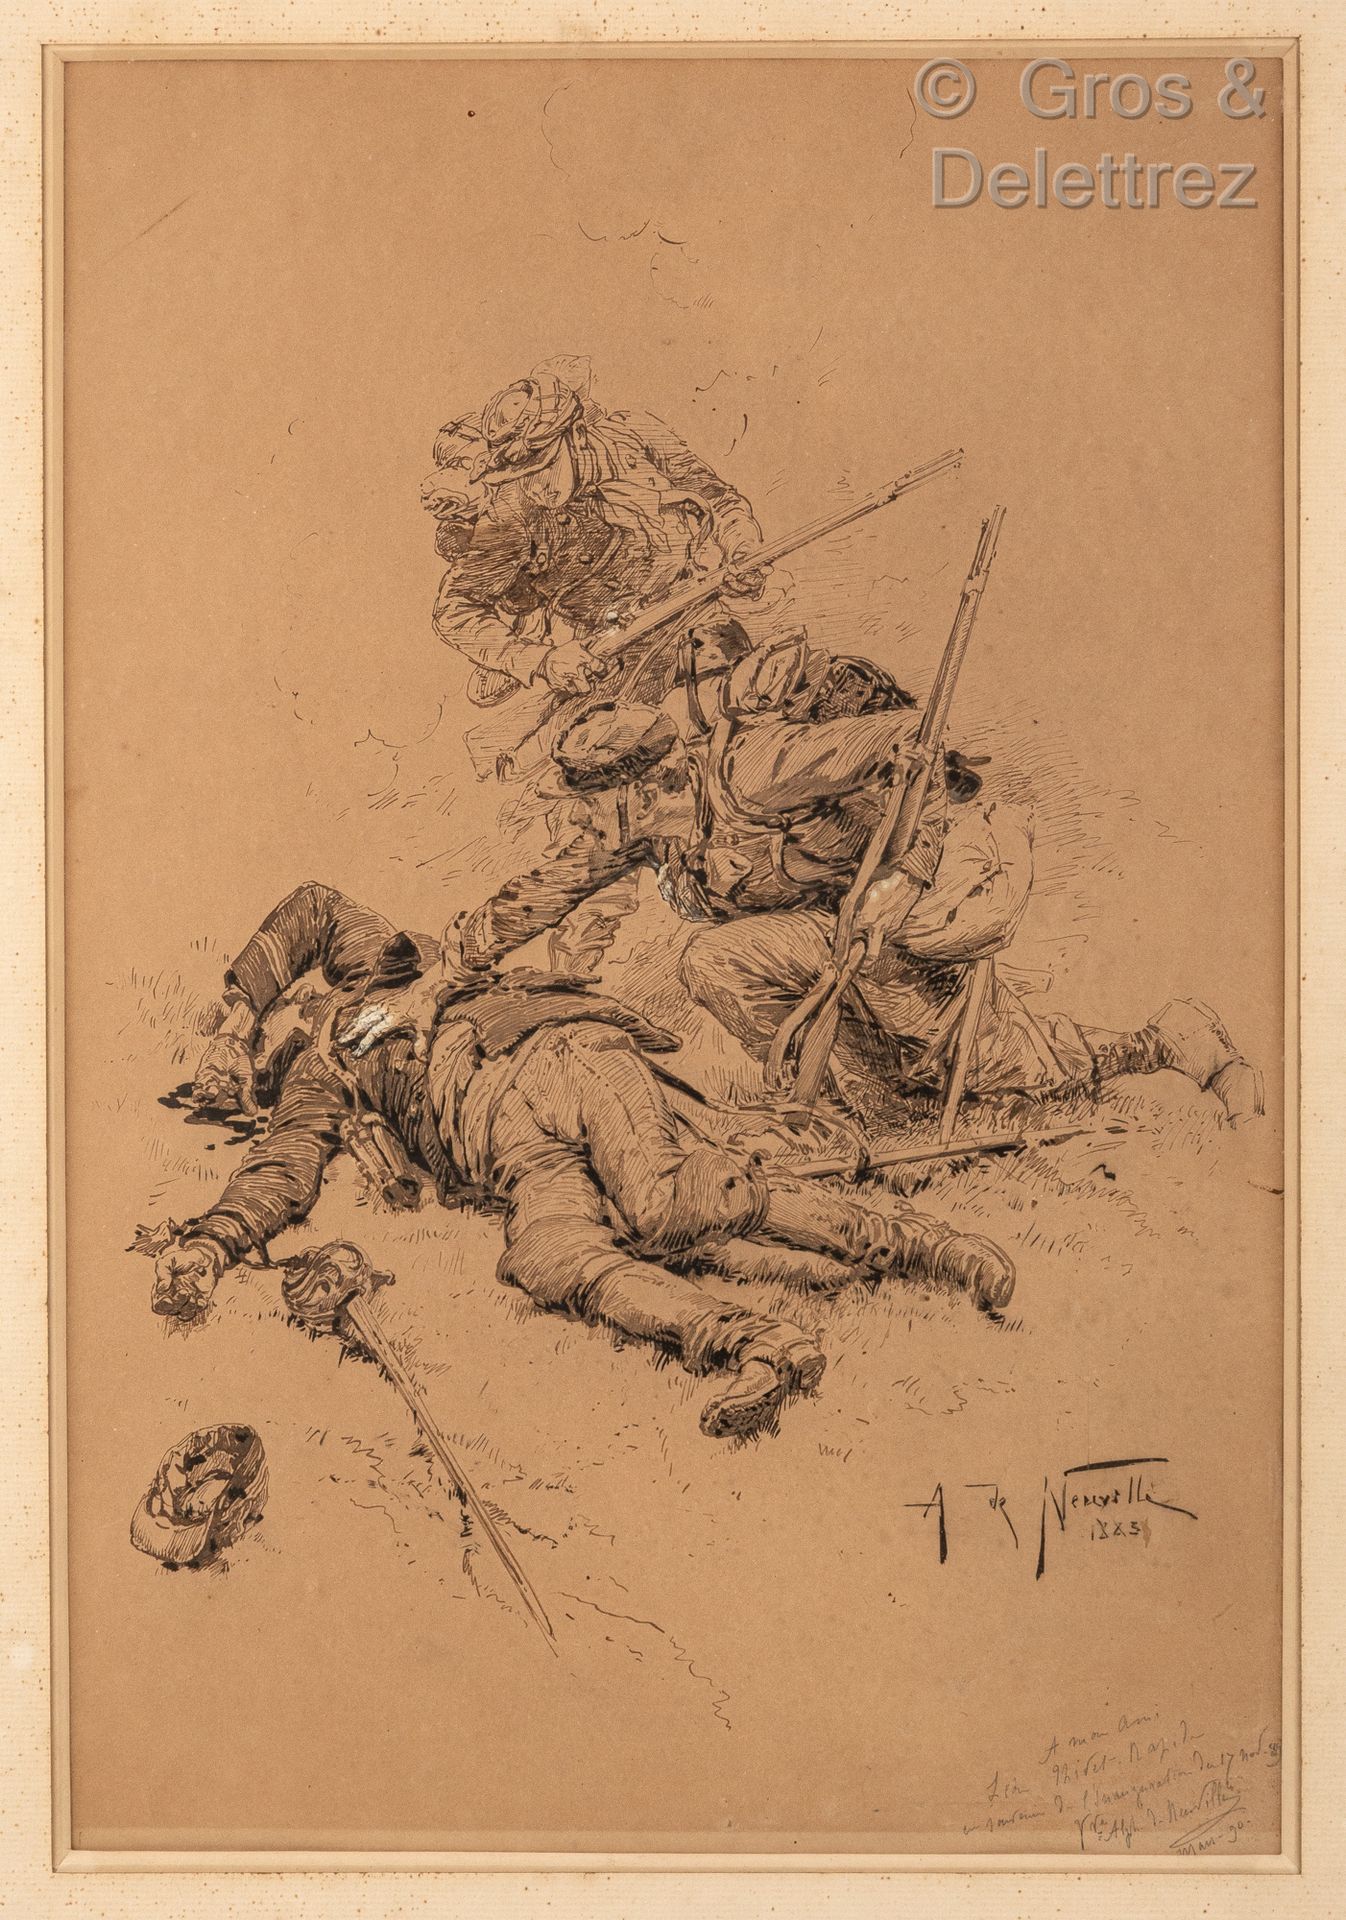 Null 阿尔方斯-德-诺伊维尔 (1835-1885)

两名步兵在抢救一名受伤的士兵

钢笔和棕色墨水，白色高光

签名和日期为 "A de Neuvill&hellip;